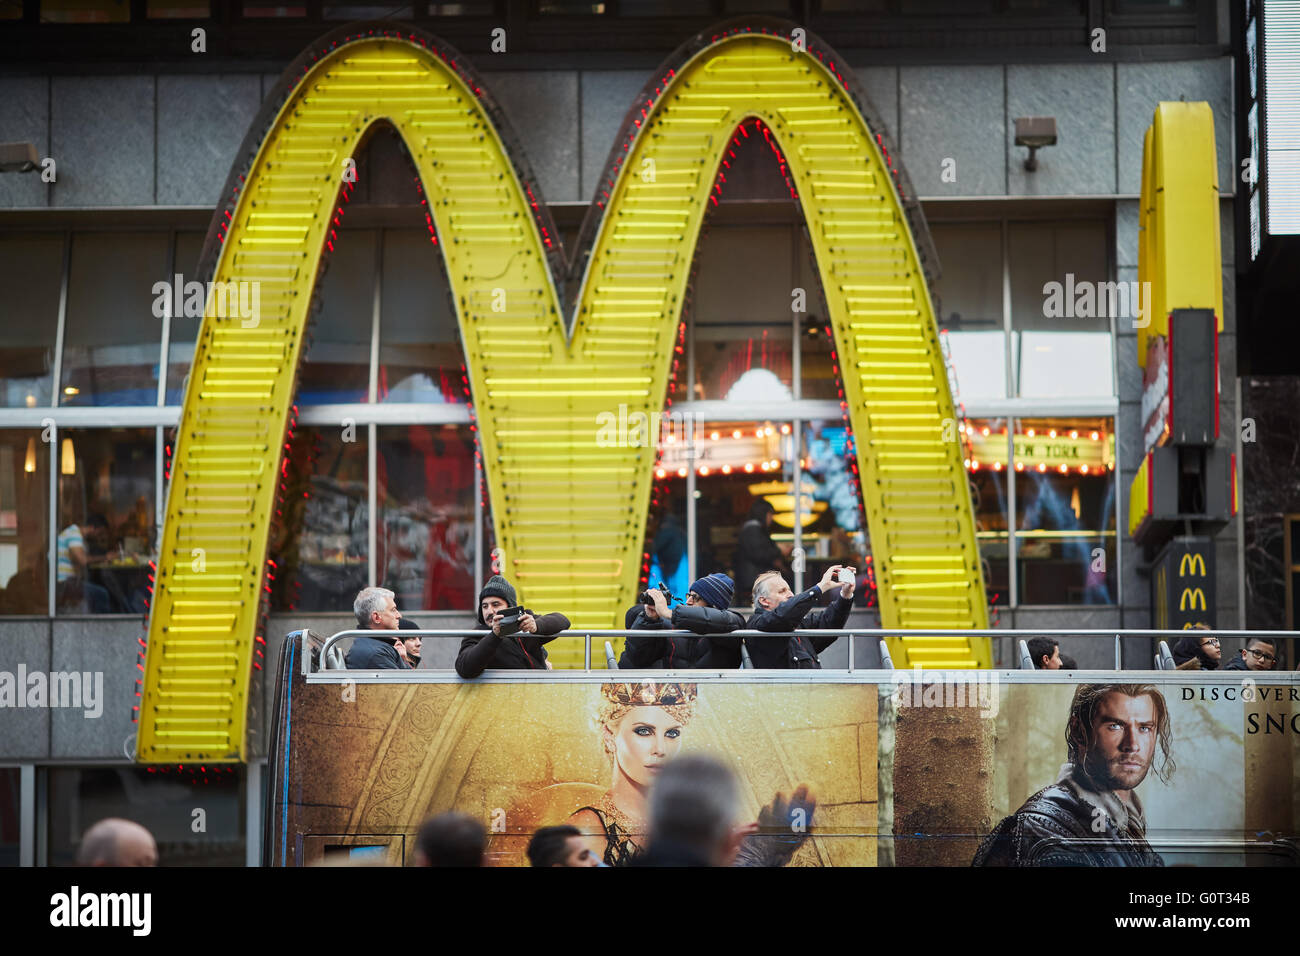 New York Times Square, Broadway McDonalds cartel gigante logo m arco grande amarillo dorado autobuses tomar fotos Foto de stock